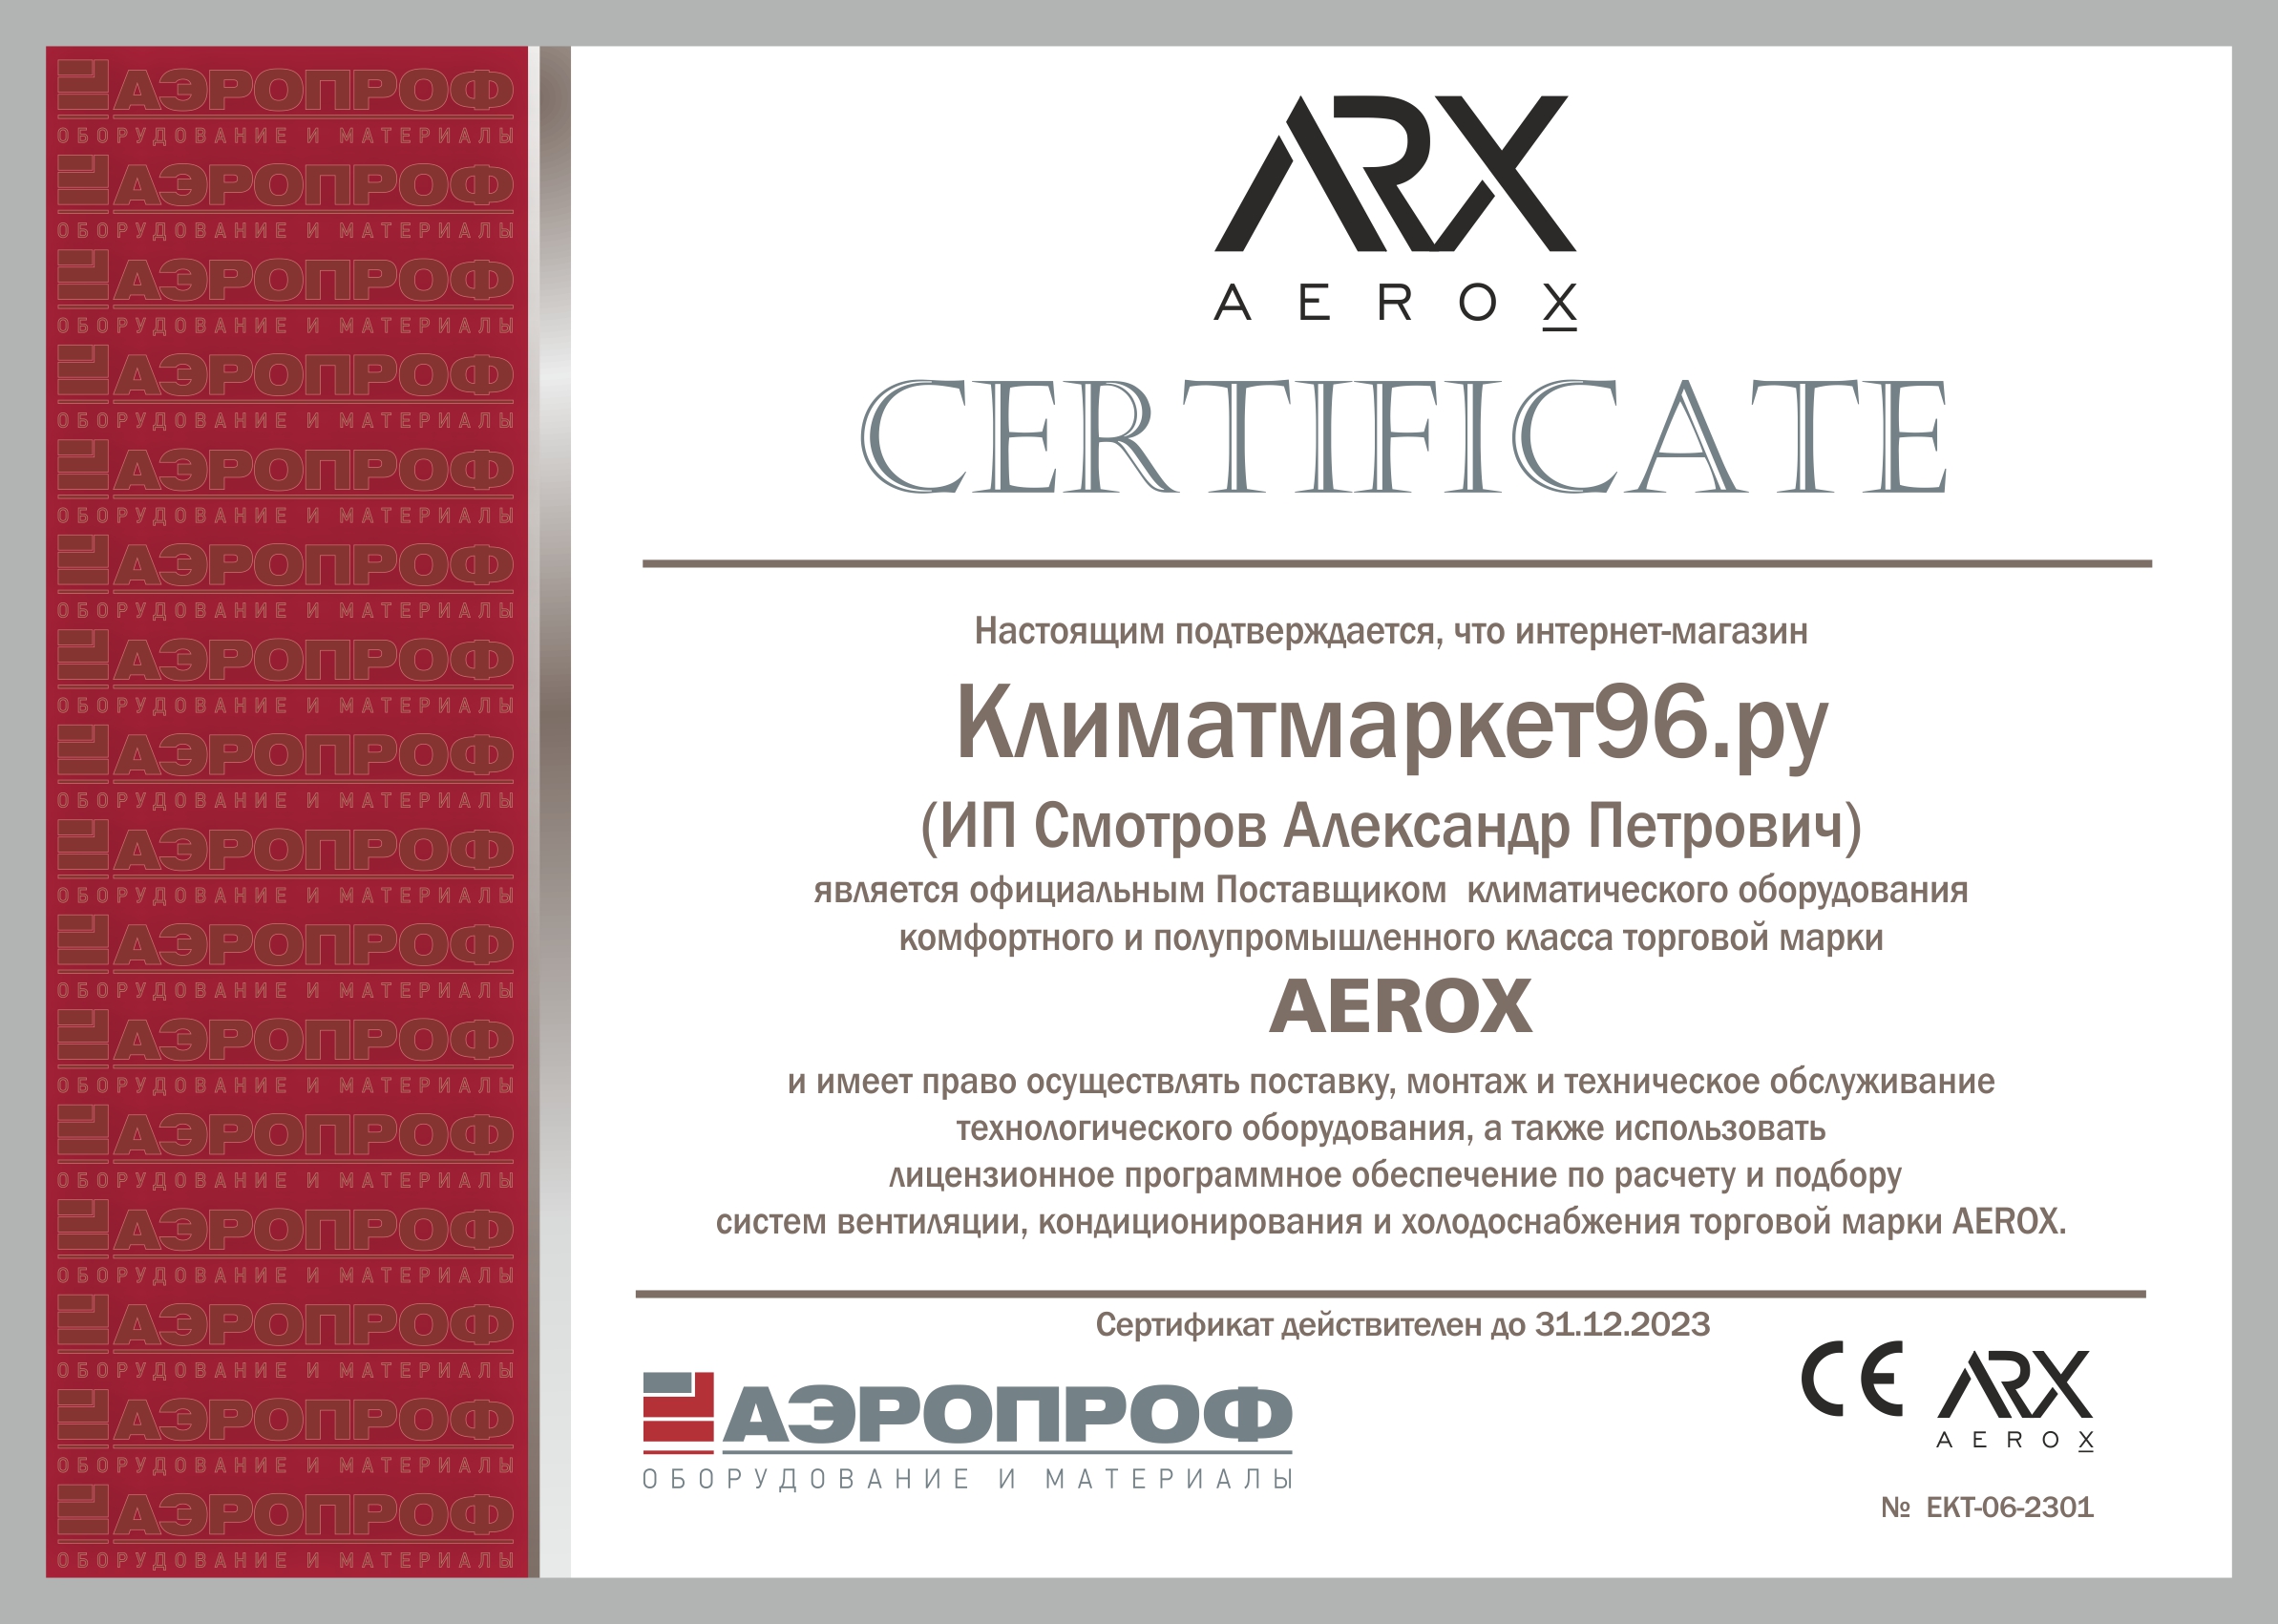 sert23-km96-arx Kondicioner Aero ALRS-36IH3A-02/ALRS-36OH3A-02 kypit v Ekaterinbyrge v internet-magazine KlimatMarket96.ry Сертификат официального дилера